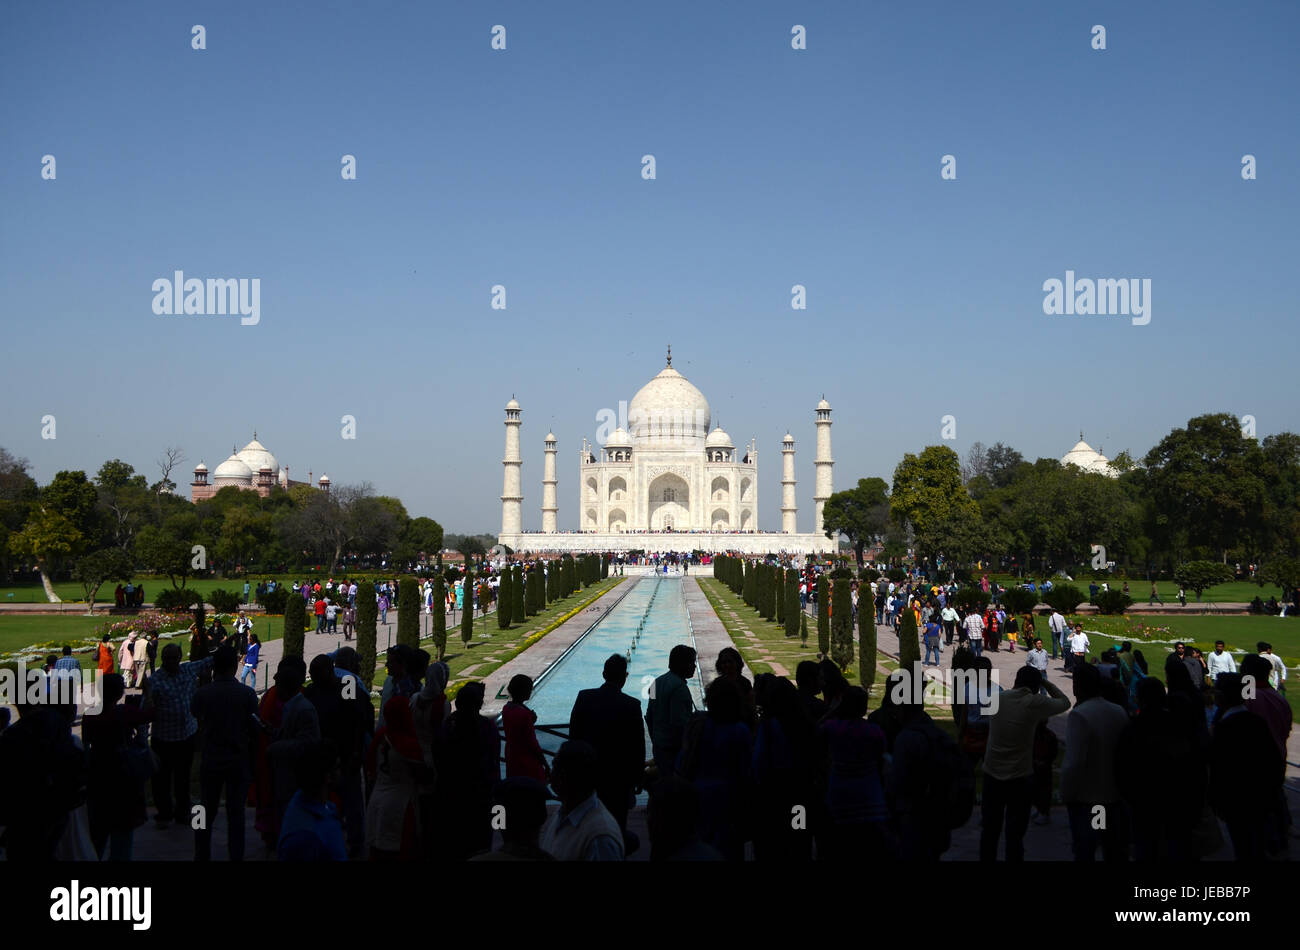 Haupteingang des Taj Mahal Gärten in Agra, Indien Stockfoto